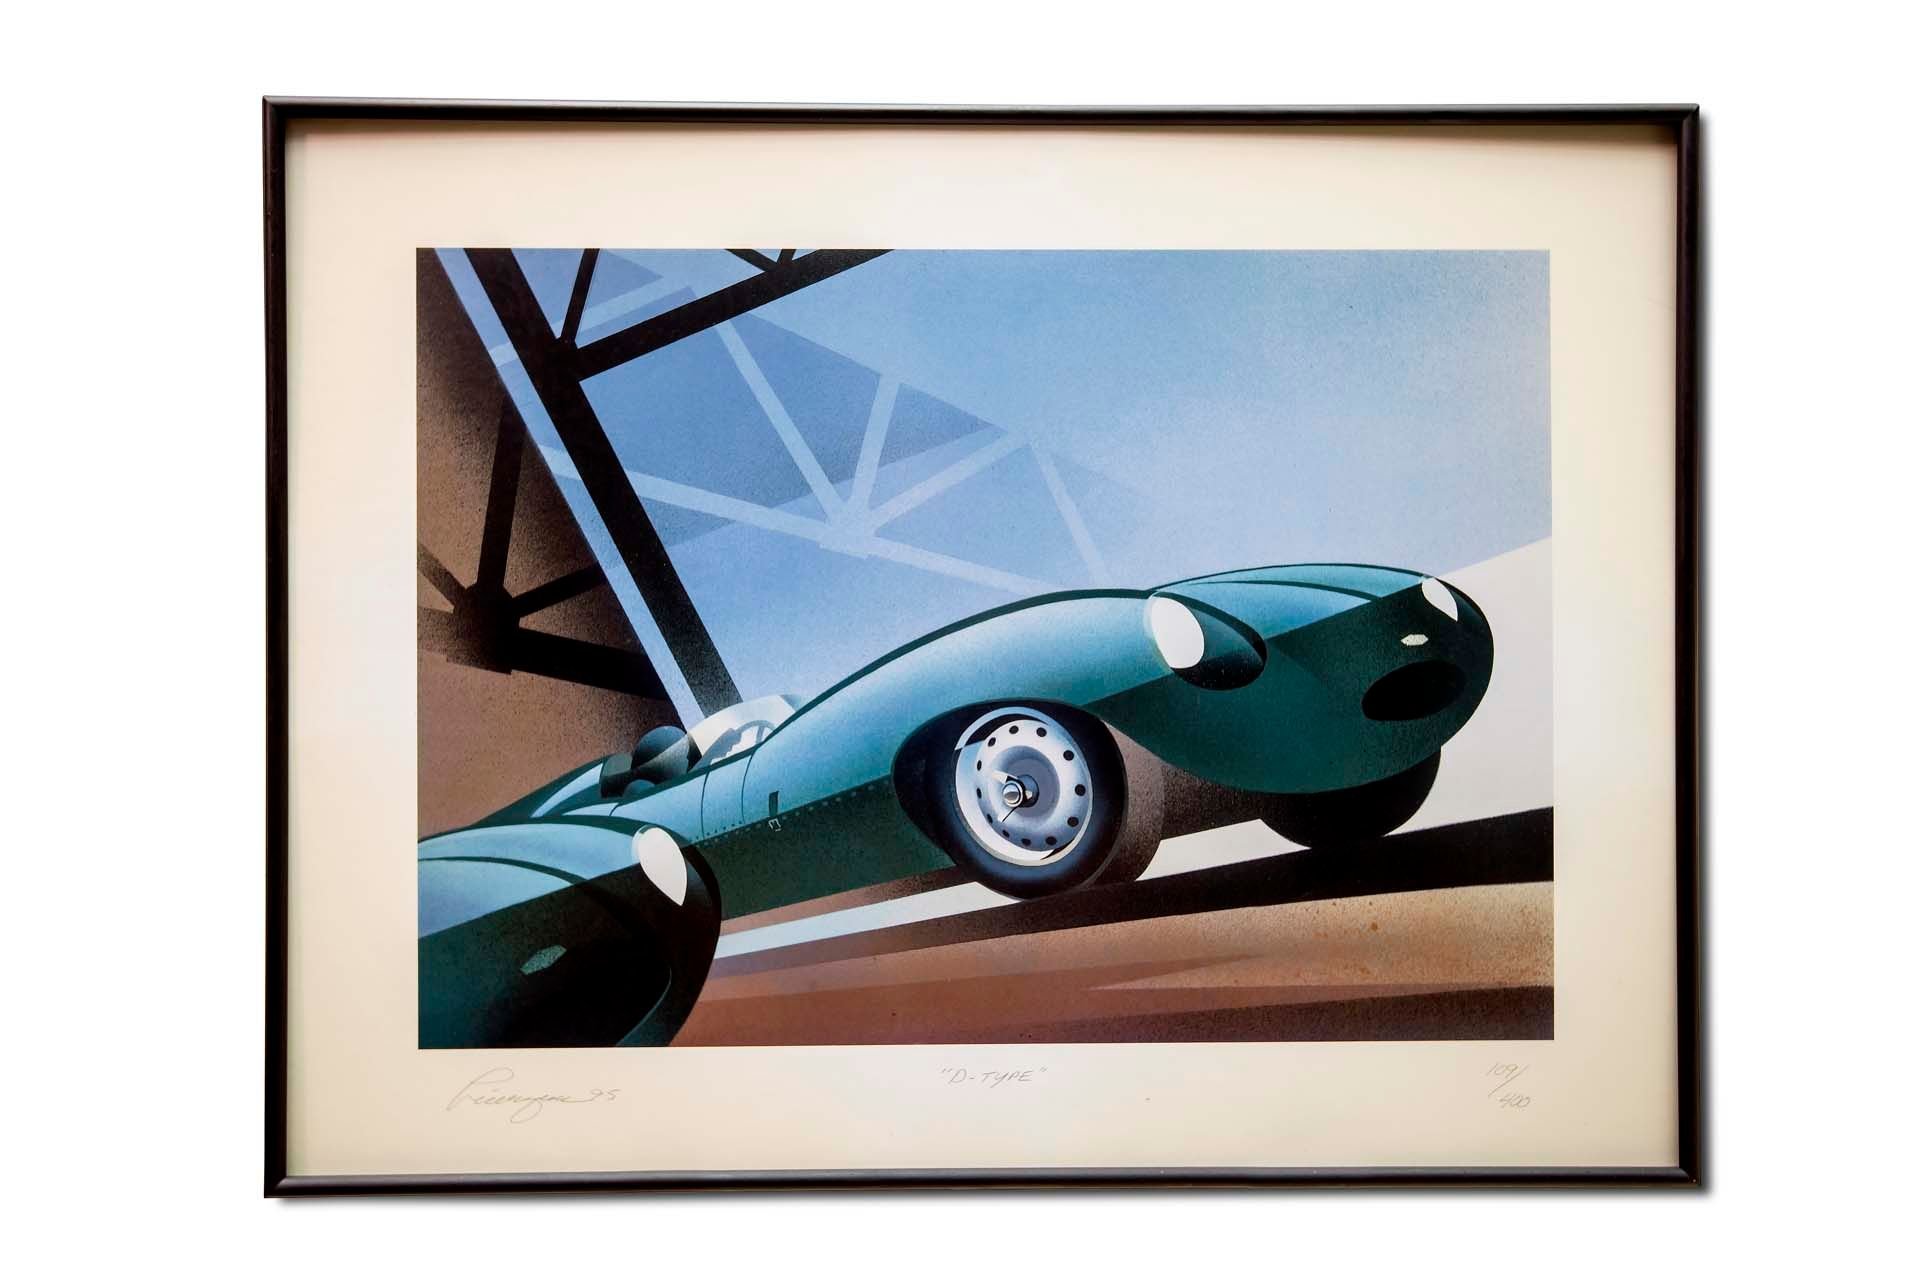 For Sale Framed 'Jaguar D-Type' Limited Edition Lithograph 109/400